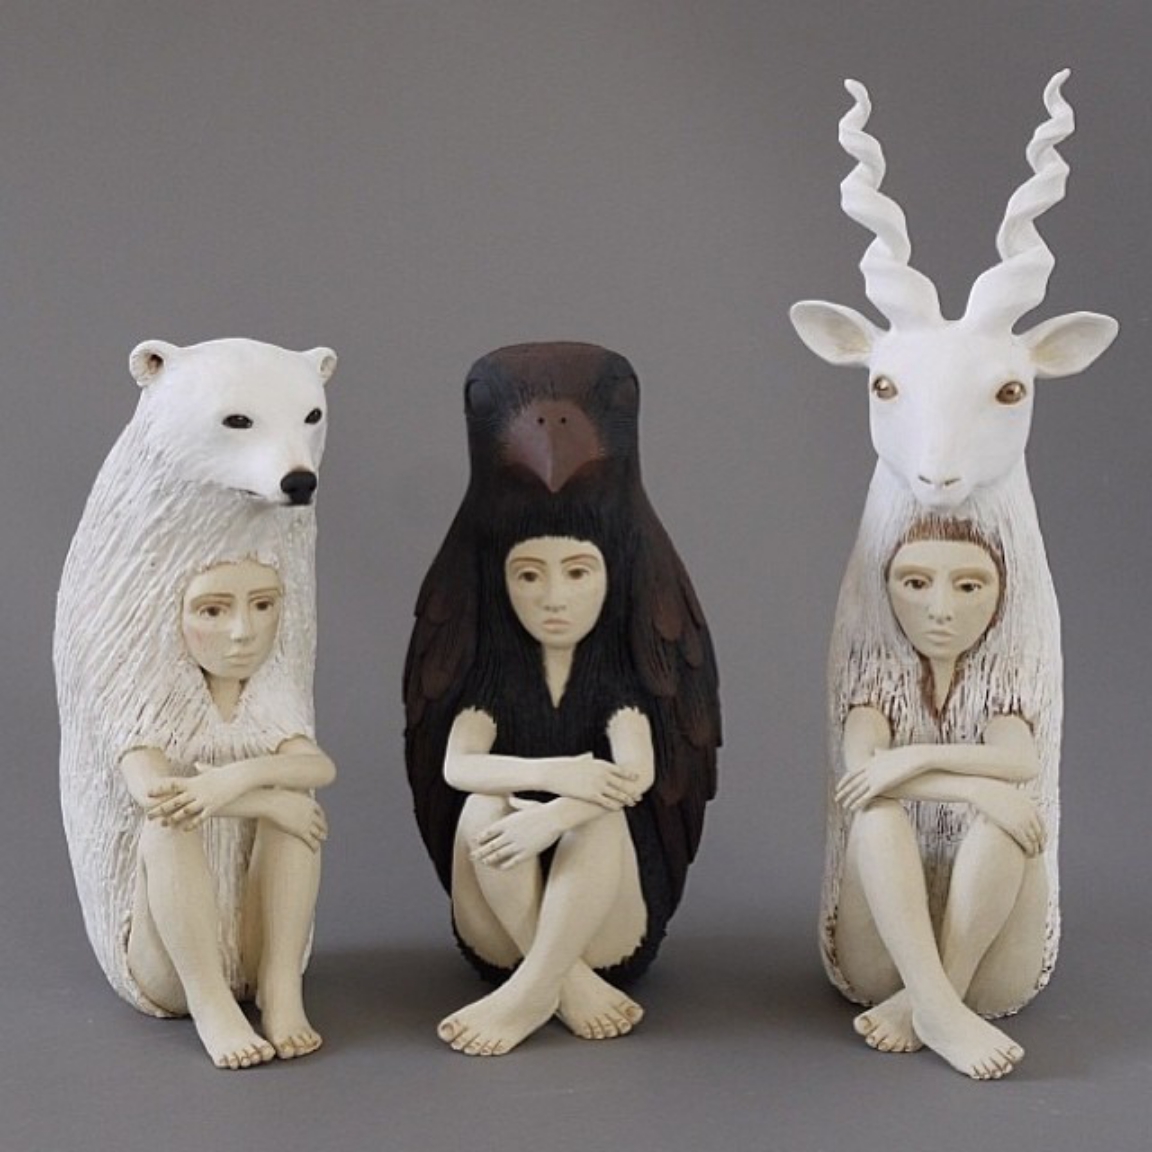 Crystal Morey's Striking Ceramic Sculptures Of Human Animal Hybrids (3)